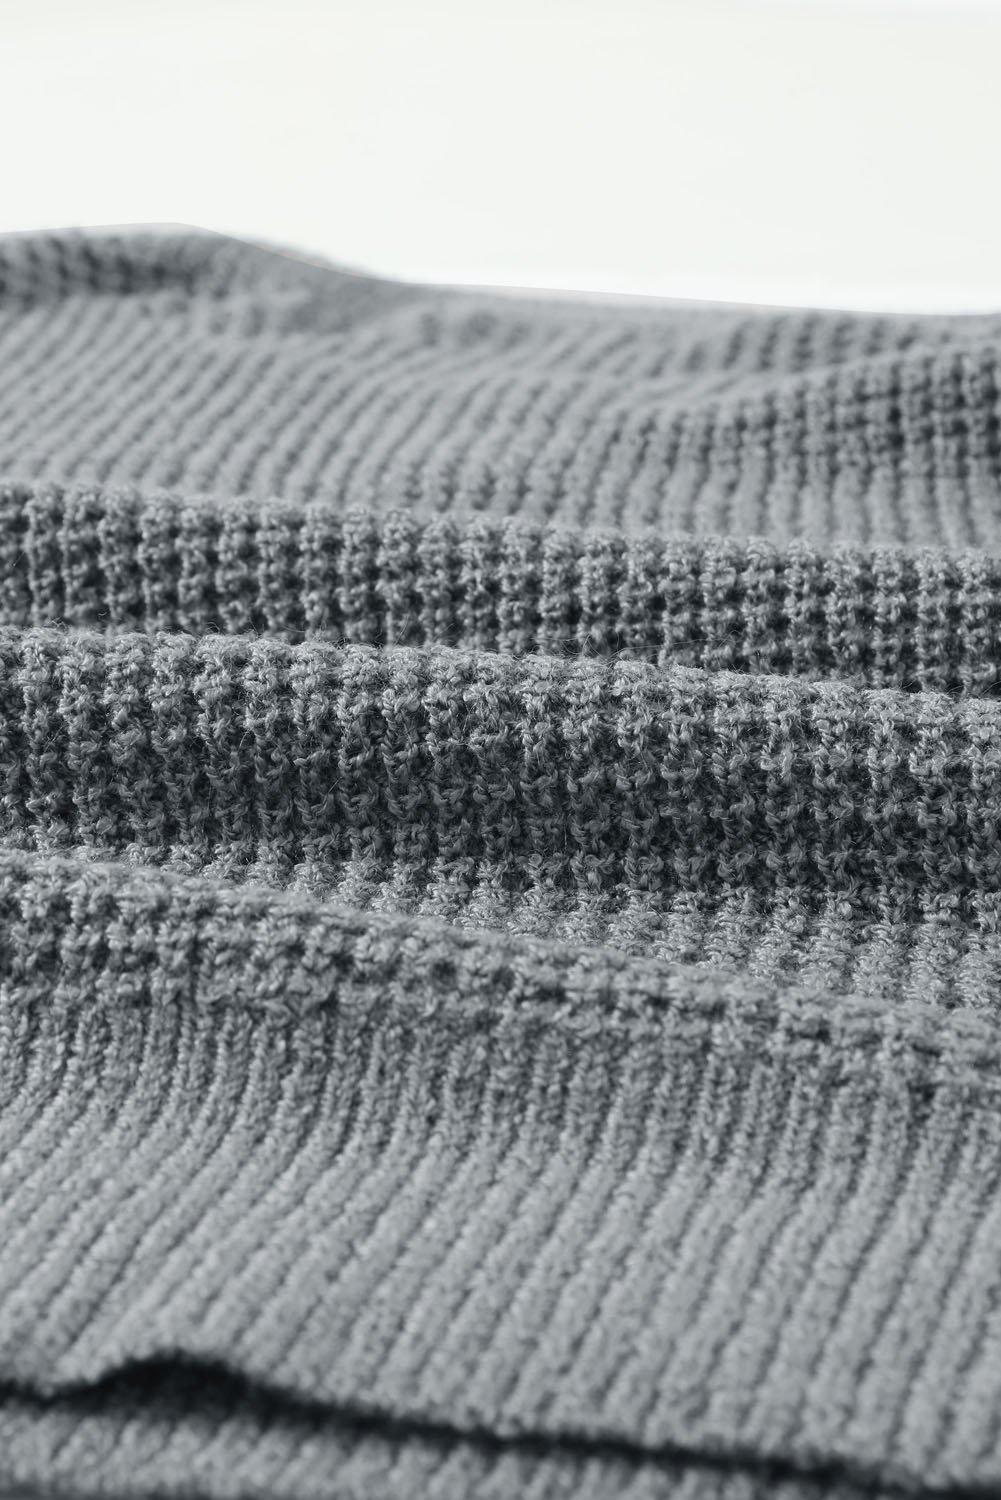 Striped Raglan Sleeve Drop Shoulder Sweater BLUE ZONE PLANET